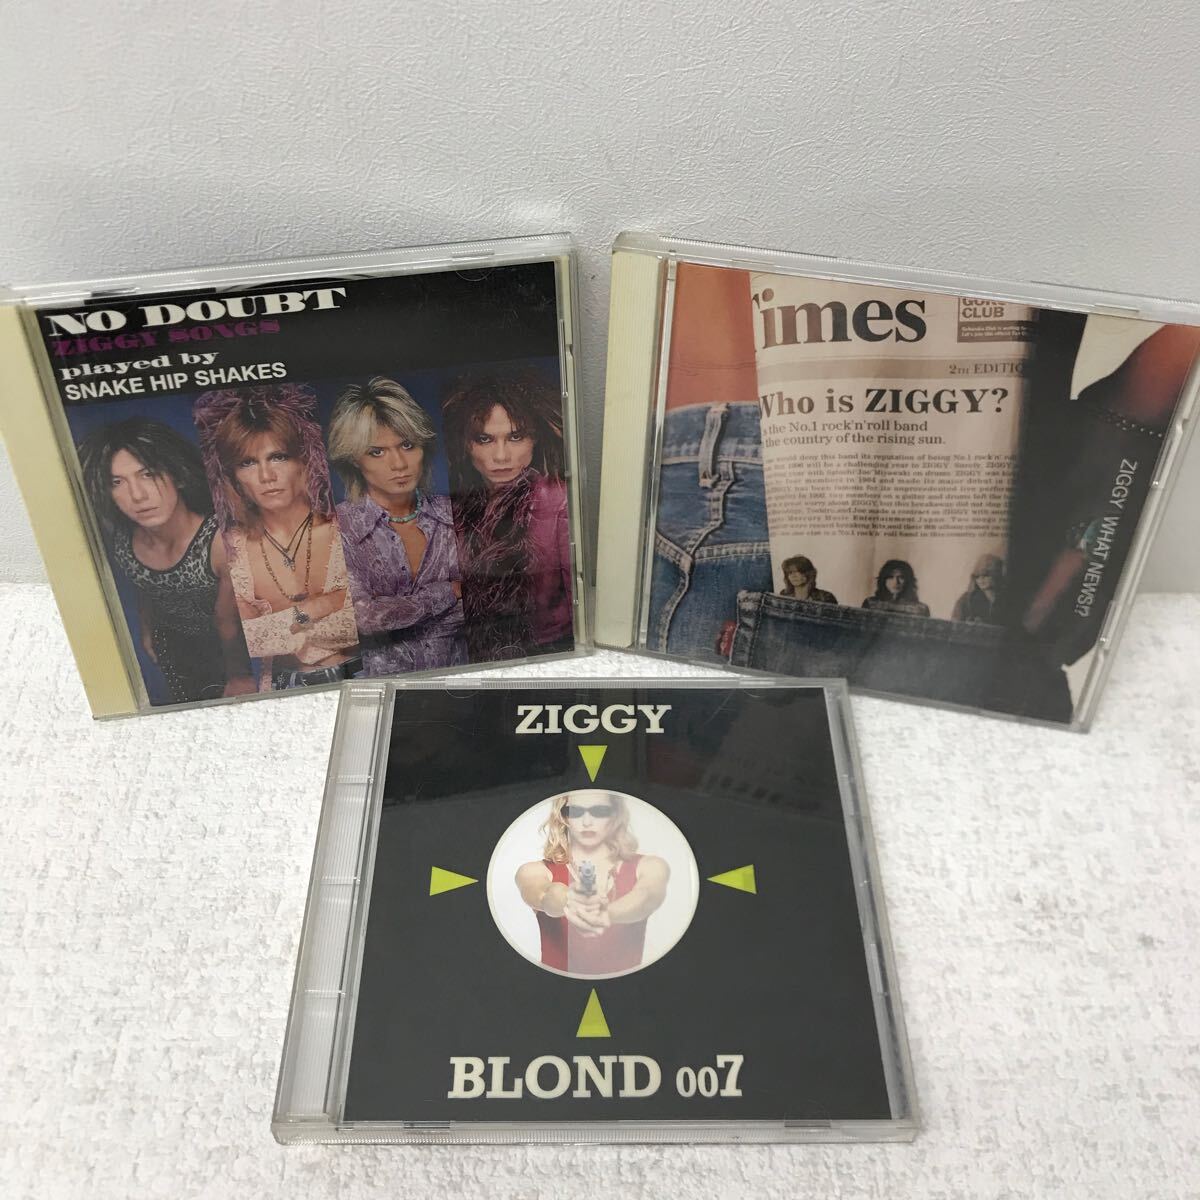 I0515D3 ZIGGY ジギー CD 5巻セット 音楽 邦楽 ロックバンド / BLOND 007 / WHAT NEWS!? / CRAWL / ZOO &RUBY / SHAKE HIP SHAKES_画像3